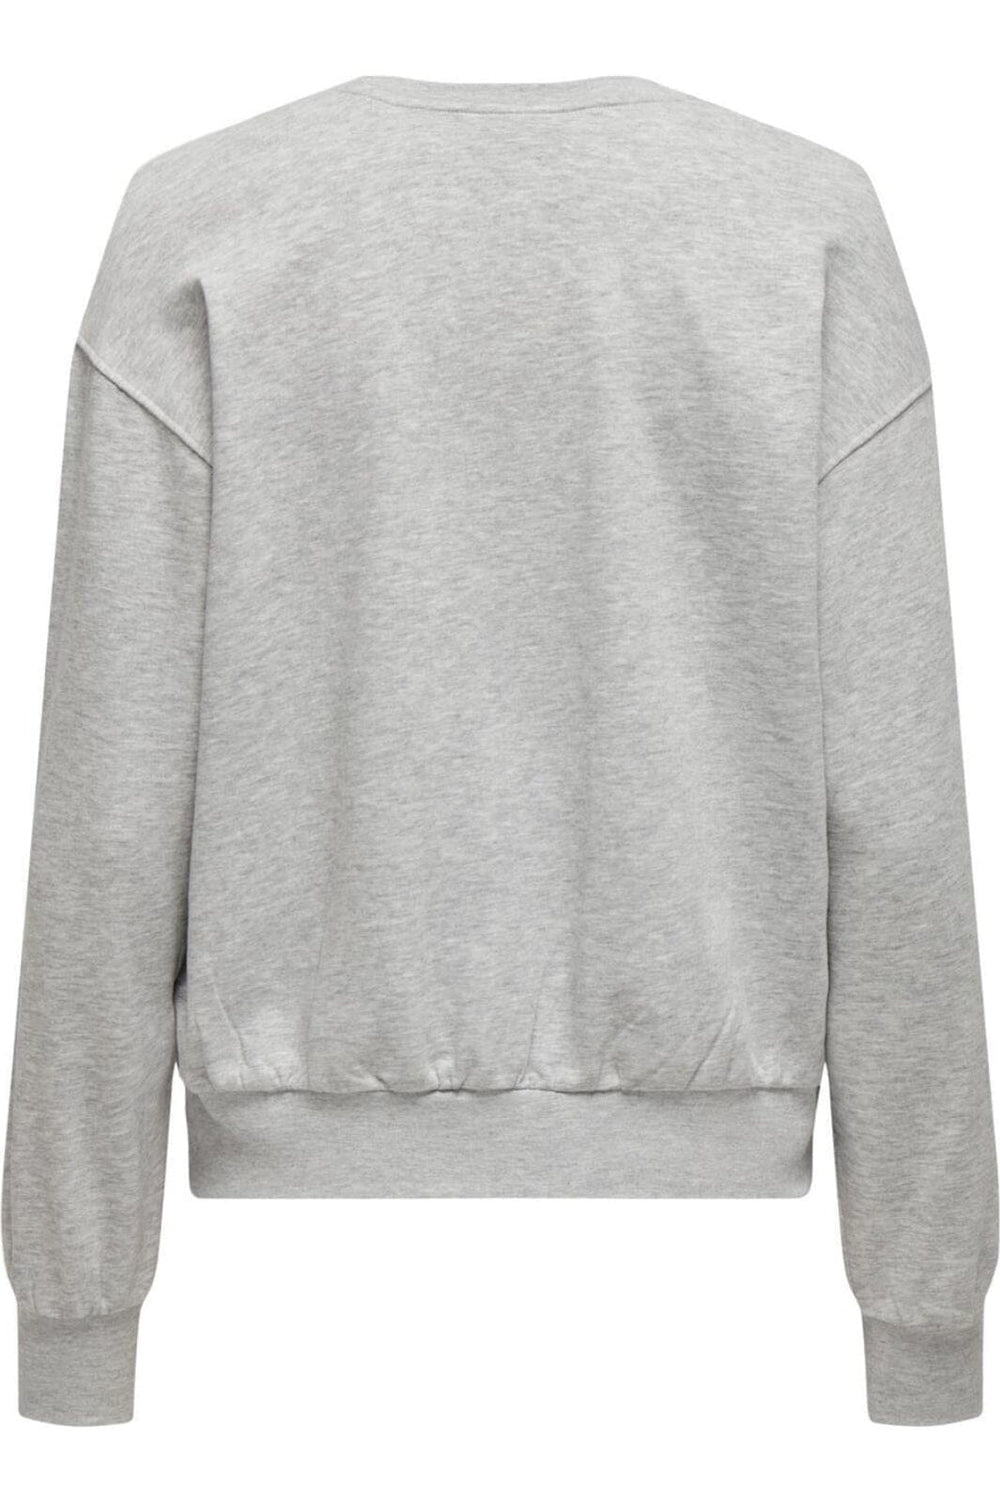 Only - Onlcarmen L/S Magasin O-Neck Box Swt - 4439810 Light Grey Melange Break Up Sweatshirt 